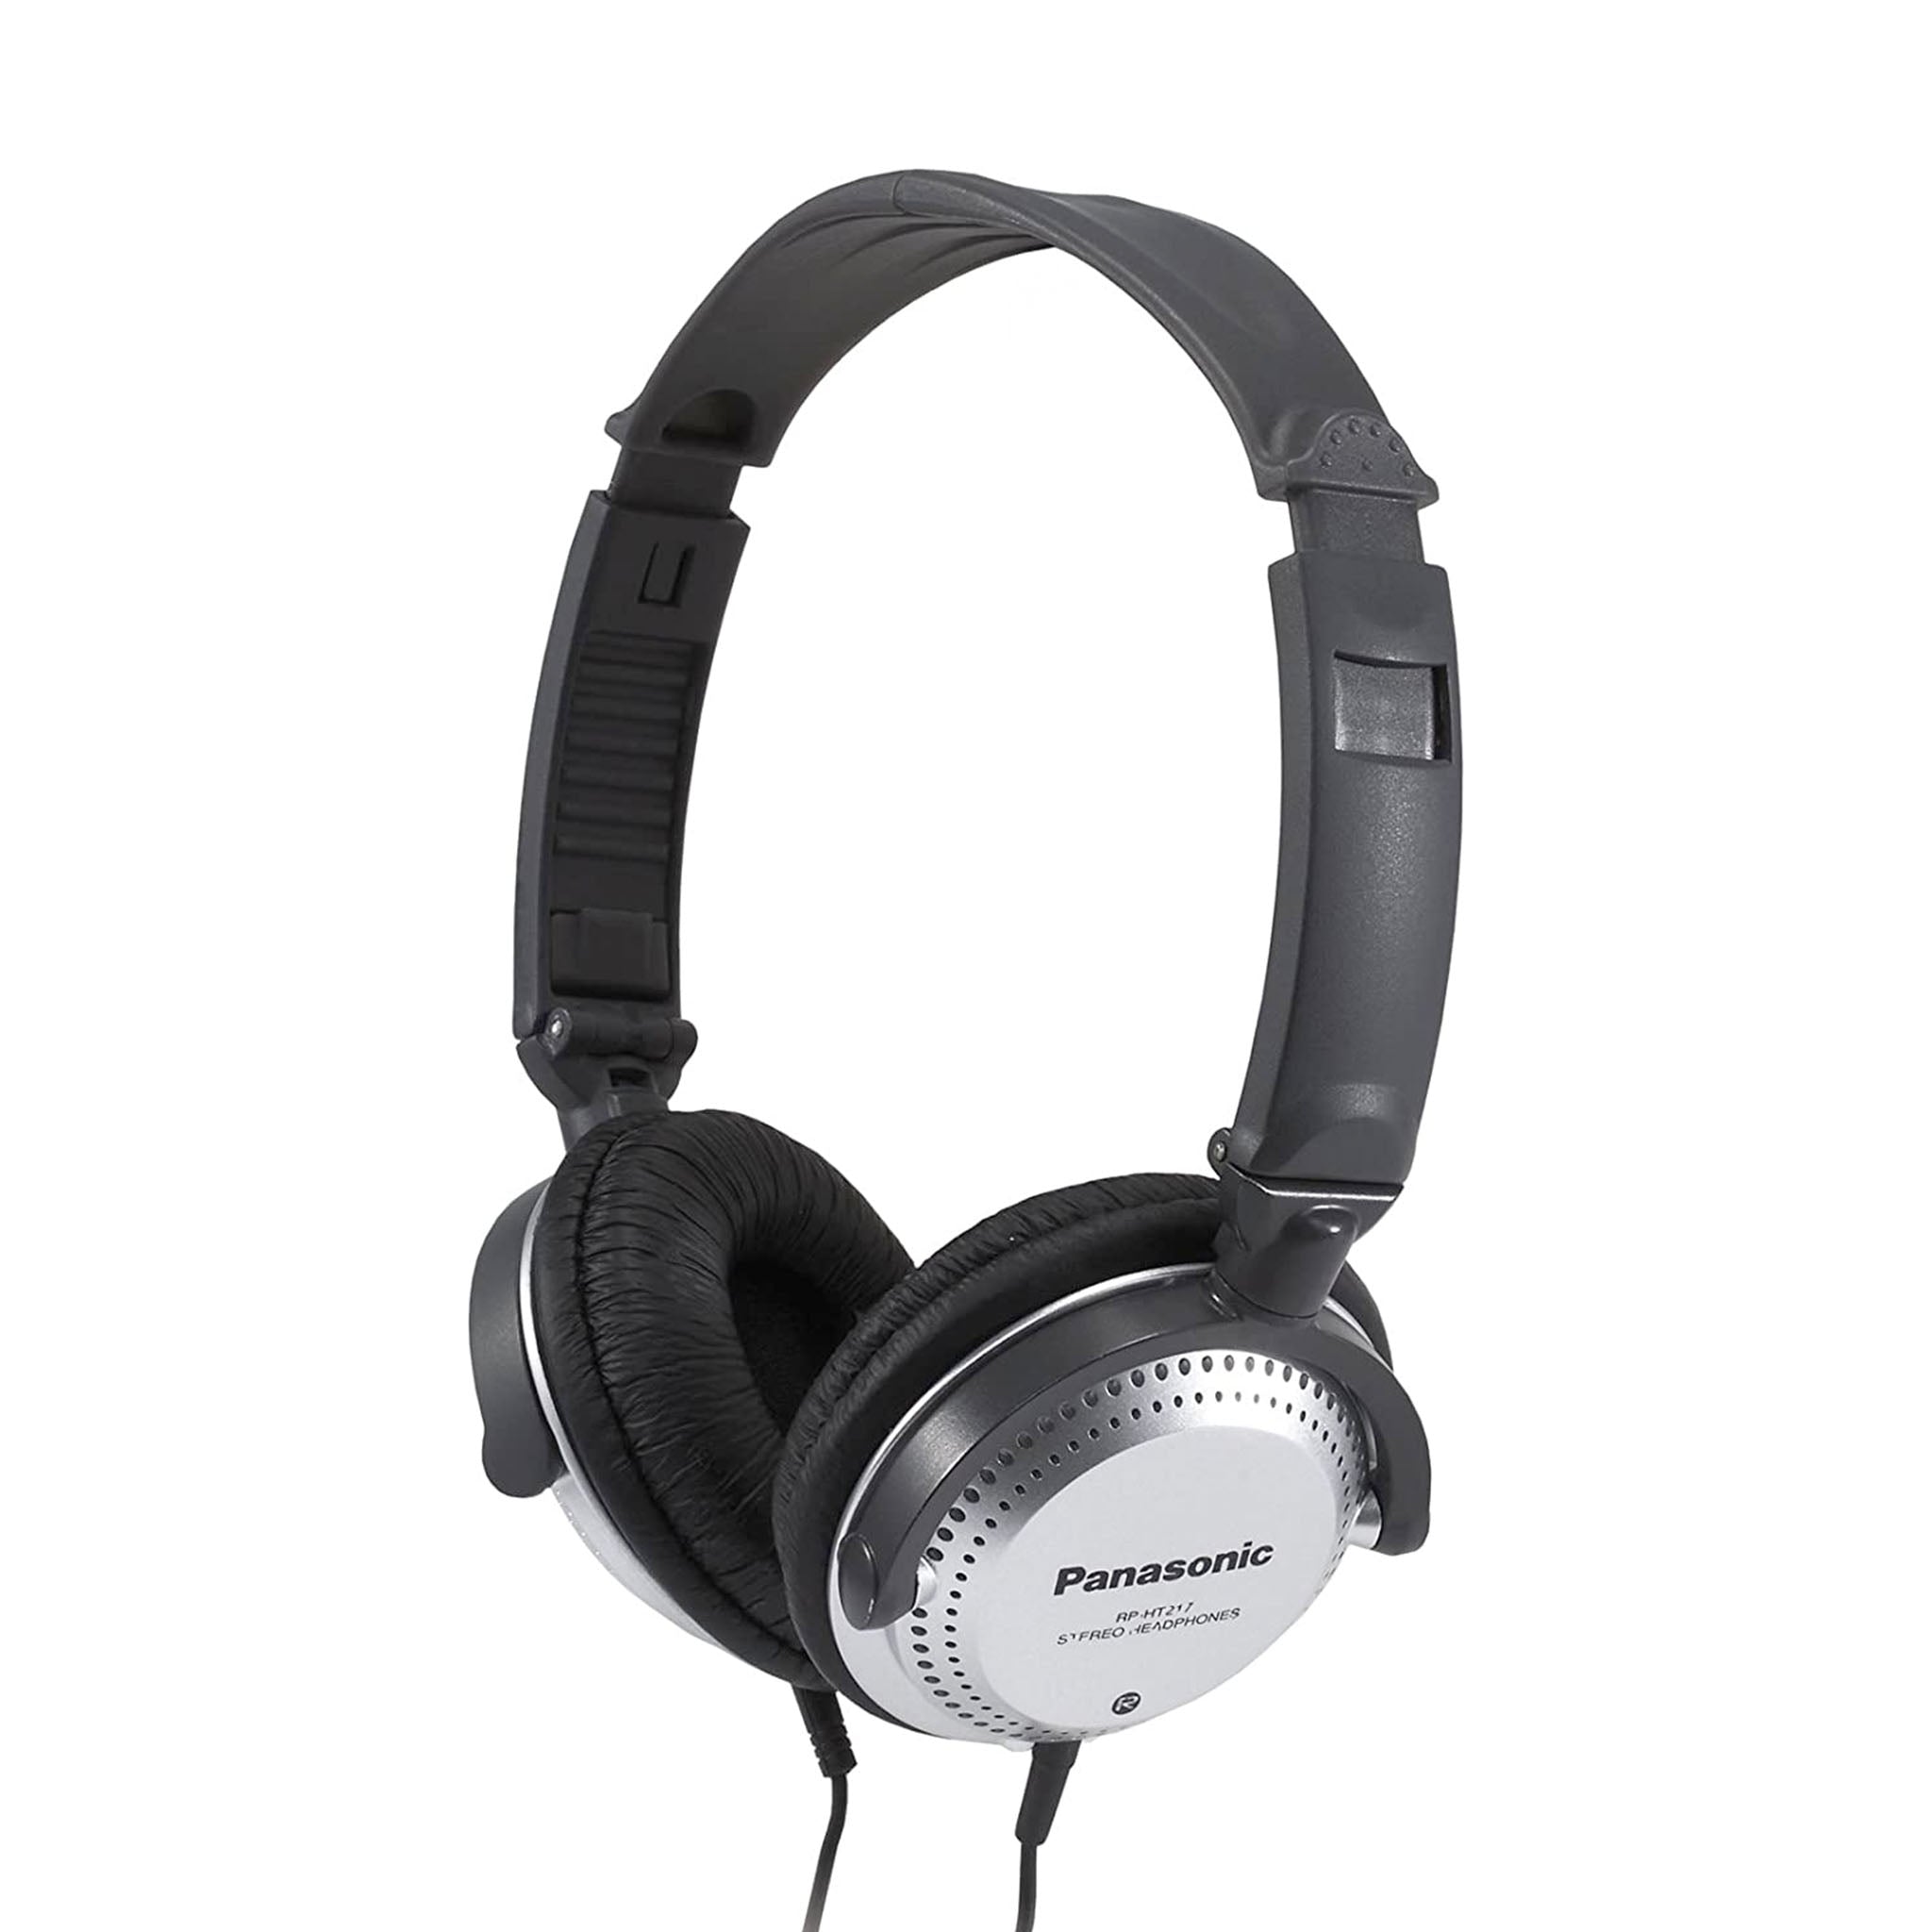 Bass XBS Headphones Panasonic Extra Deep - Ear with for RP-HT227 On